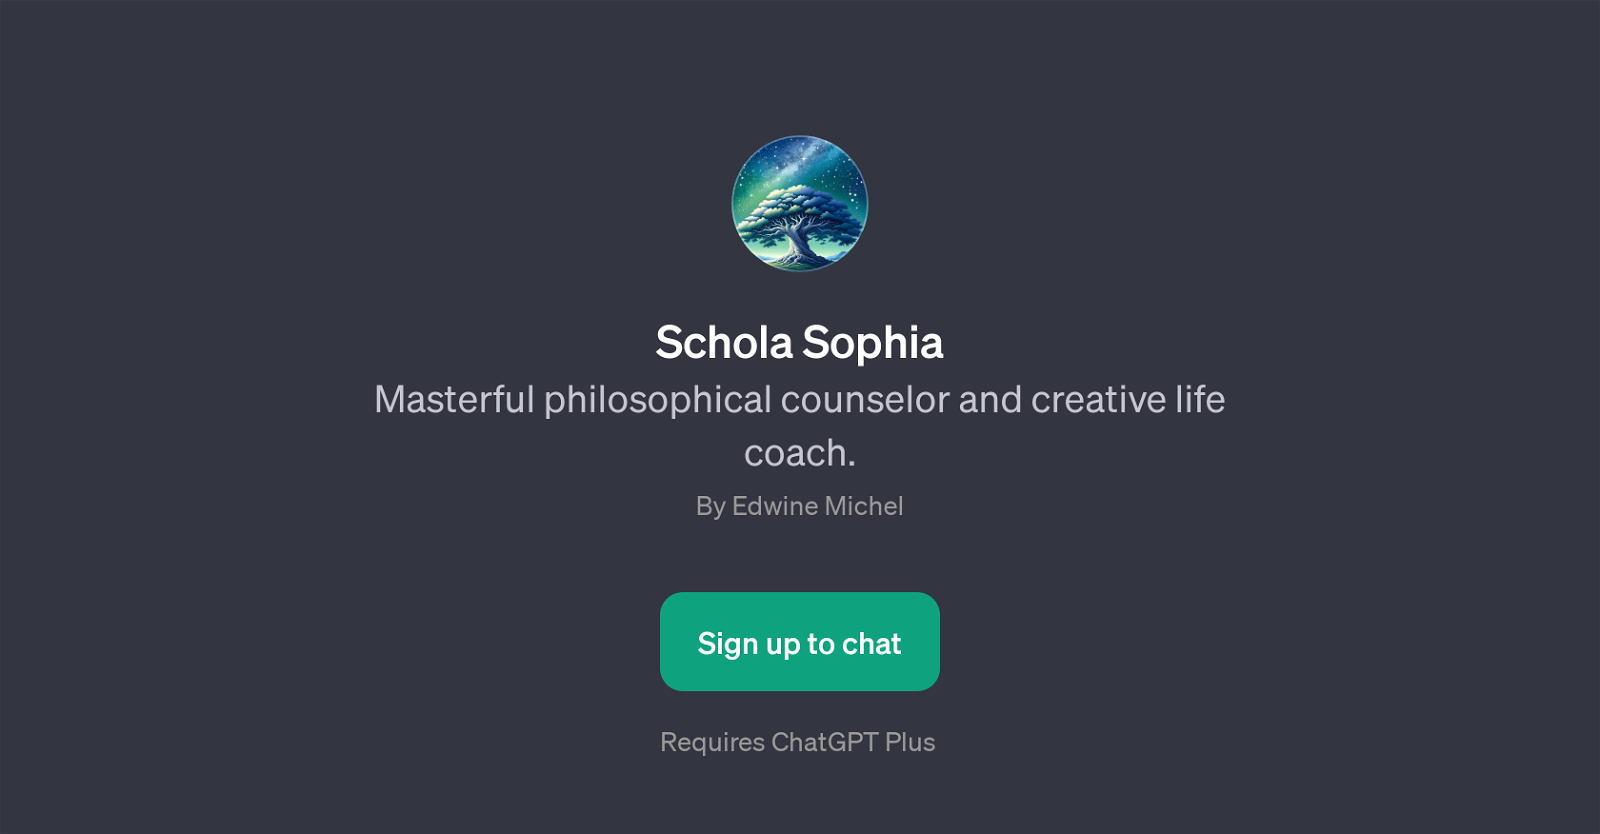 Schola Sophia website